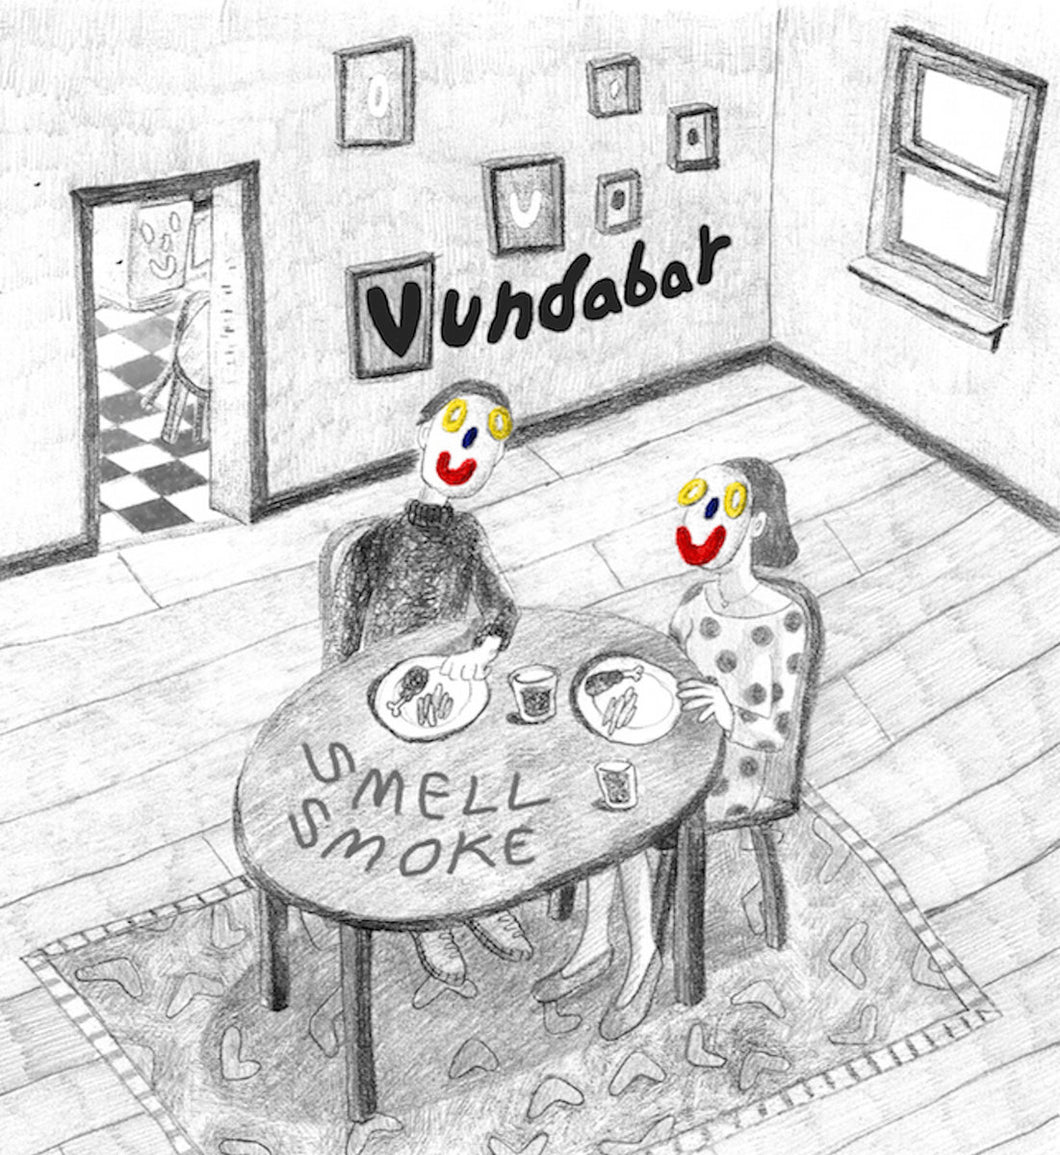 Vundabar - Smell Smoke limited edition vinyl